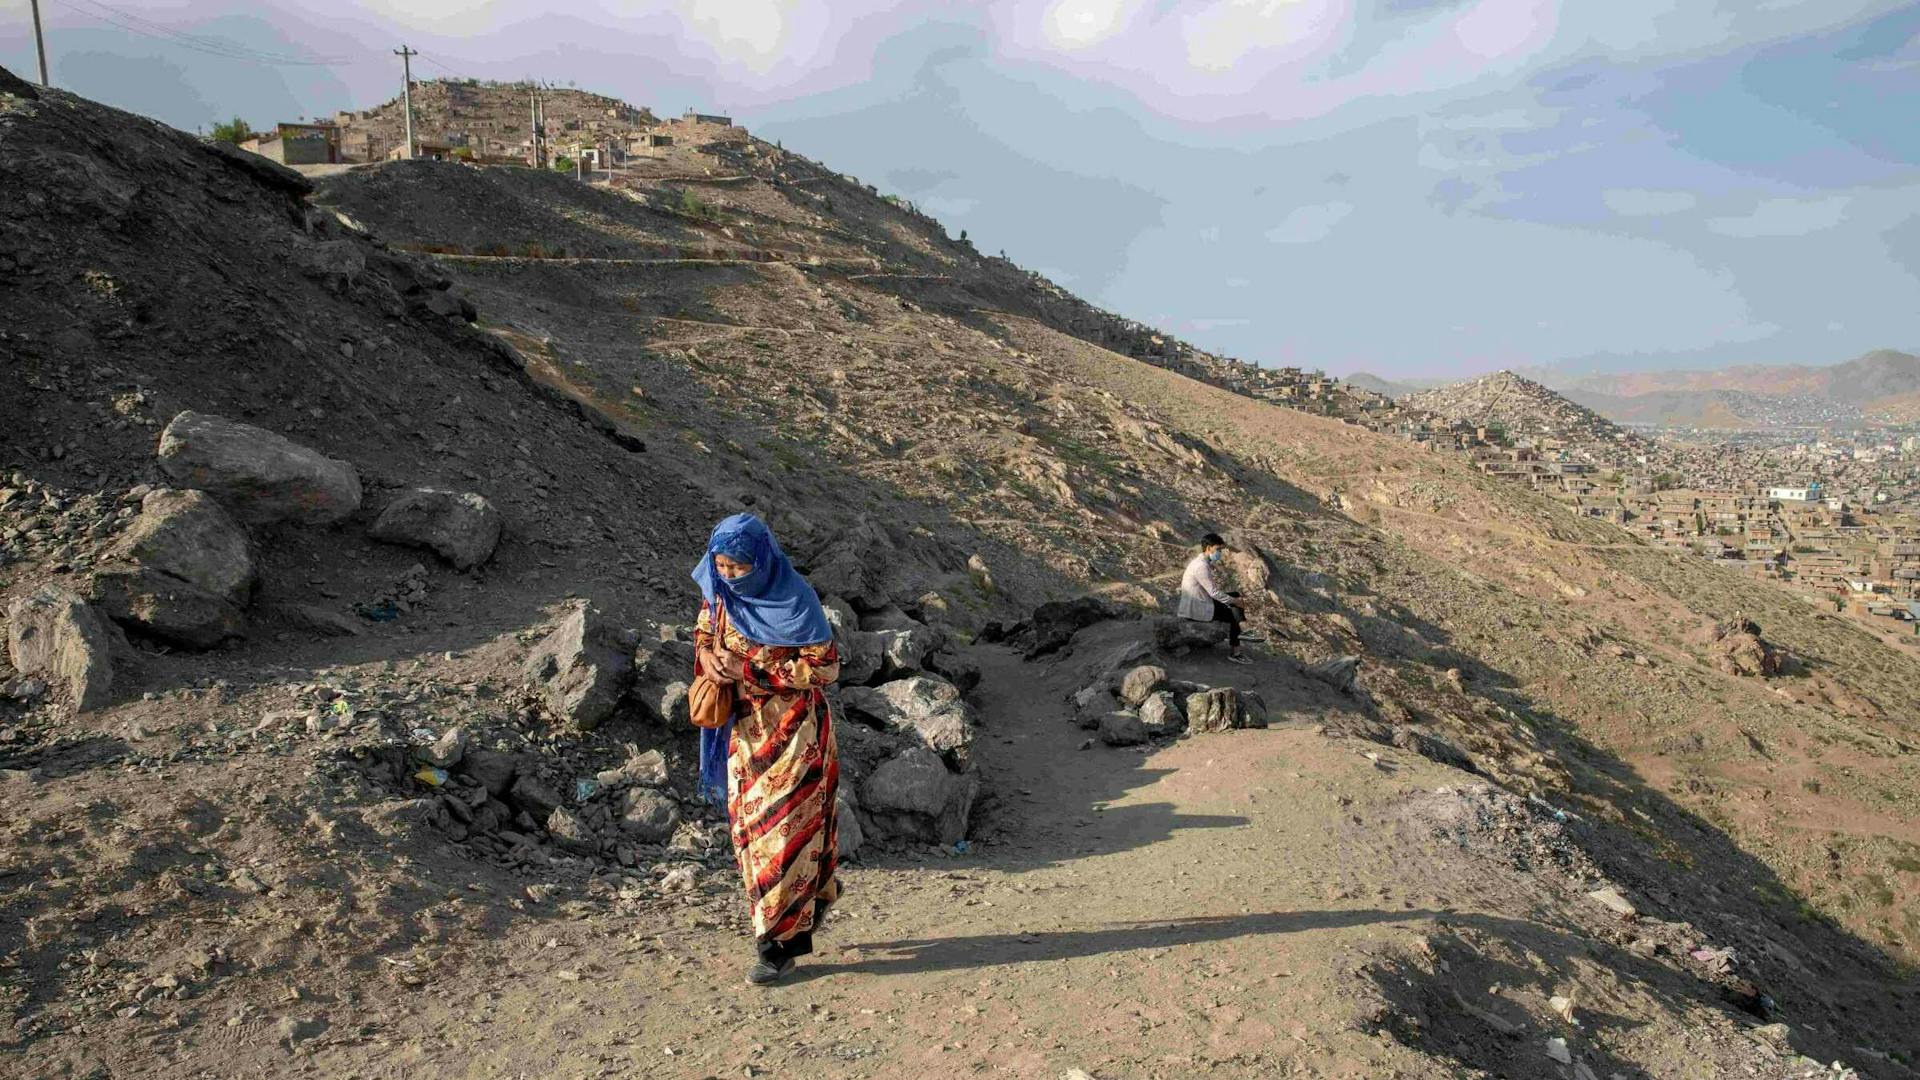 A woman in a blue headscarf walks alone down a dry mountain path.